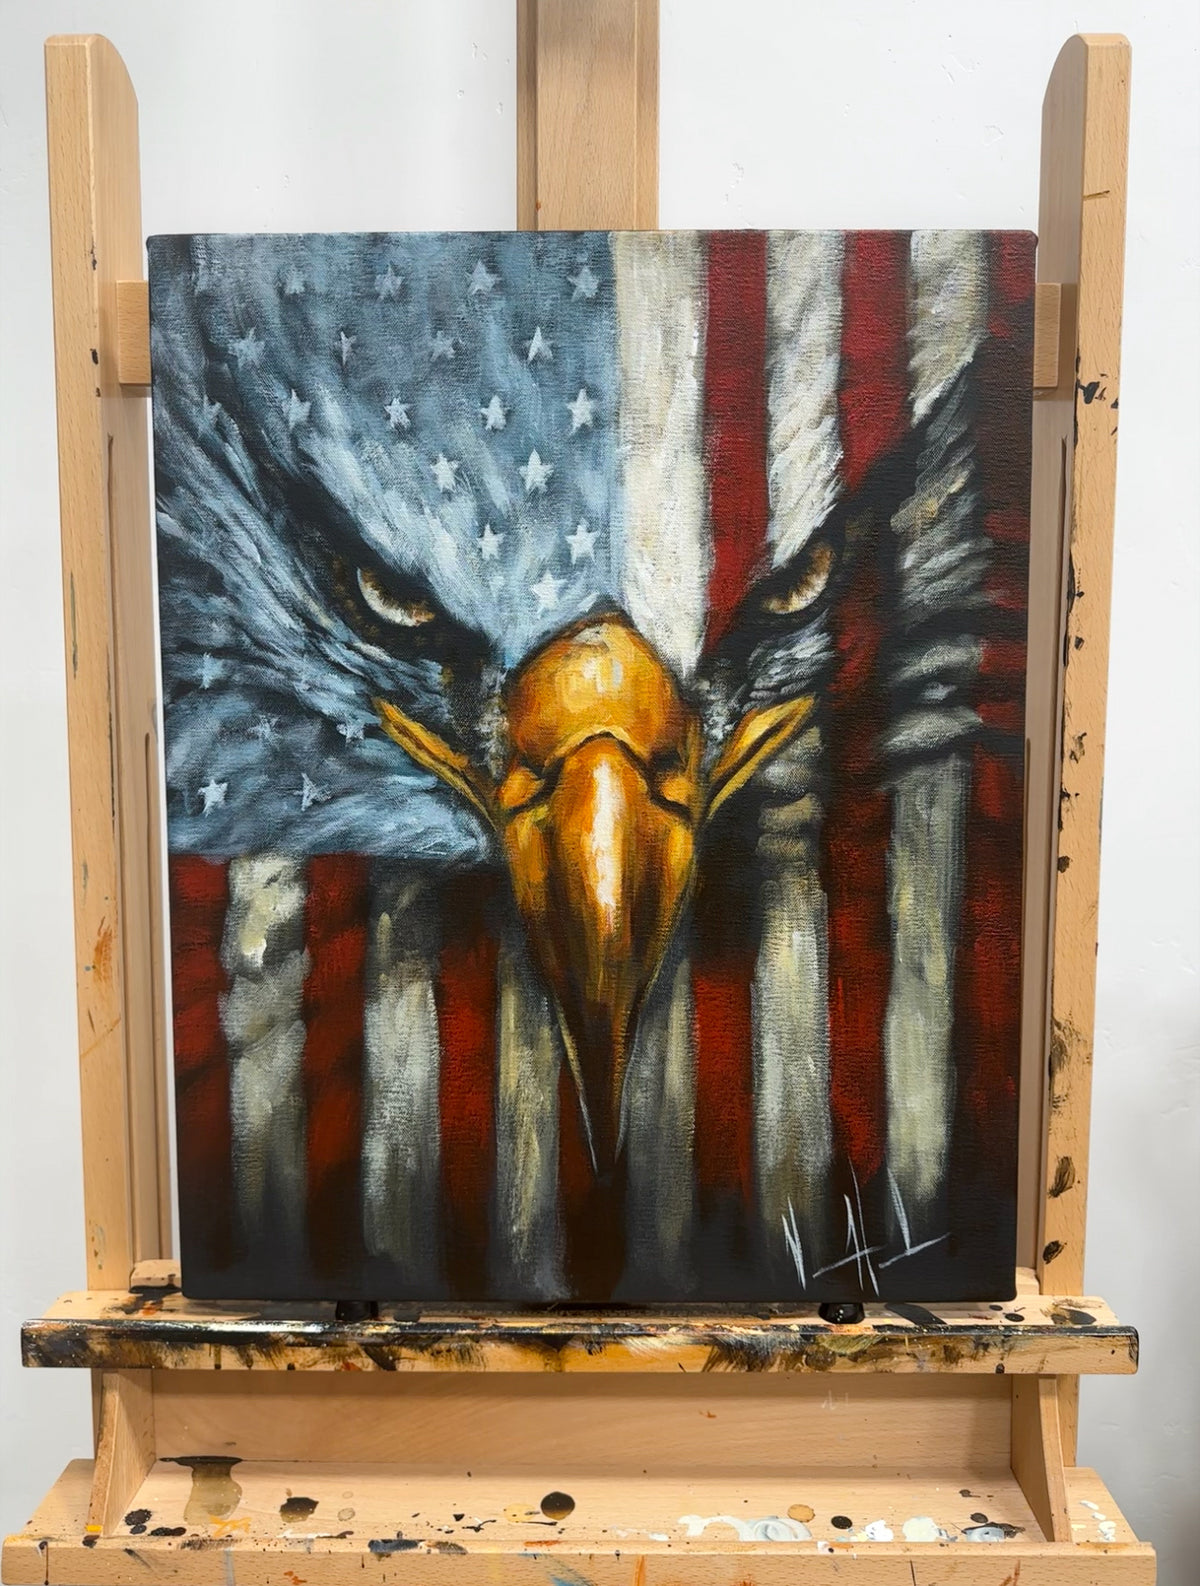 Stripes of Freedom - 16”x20” Original Acrylic Painting